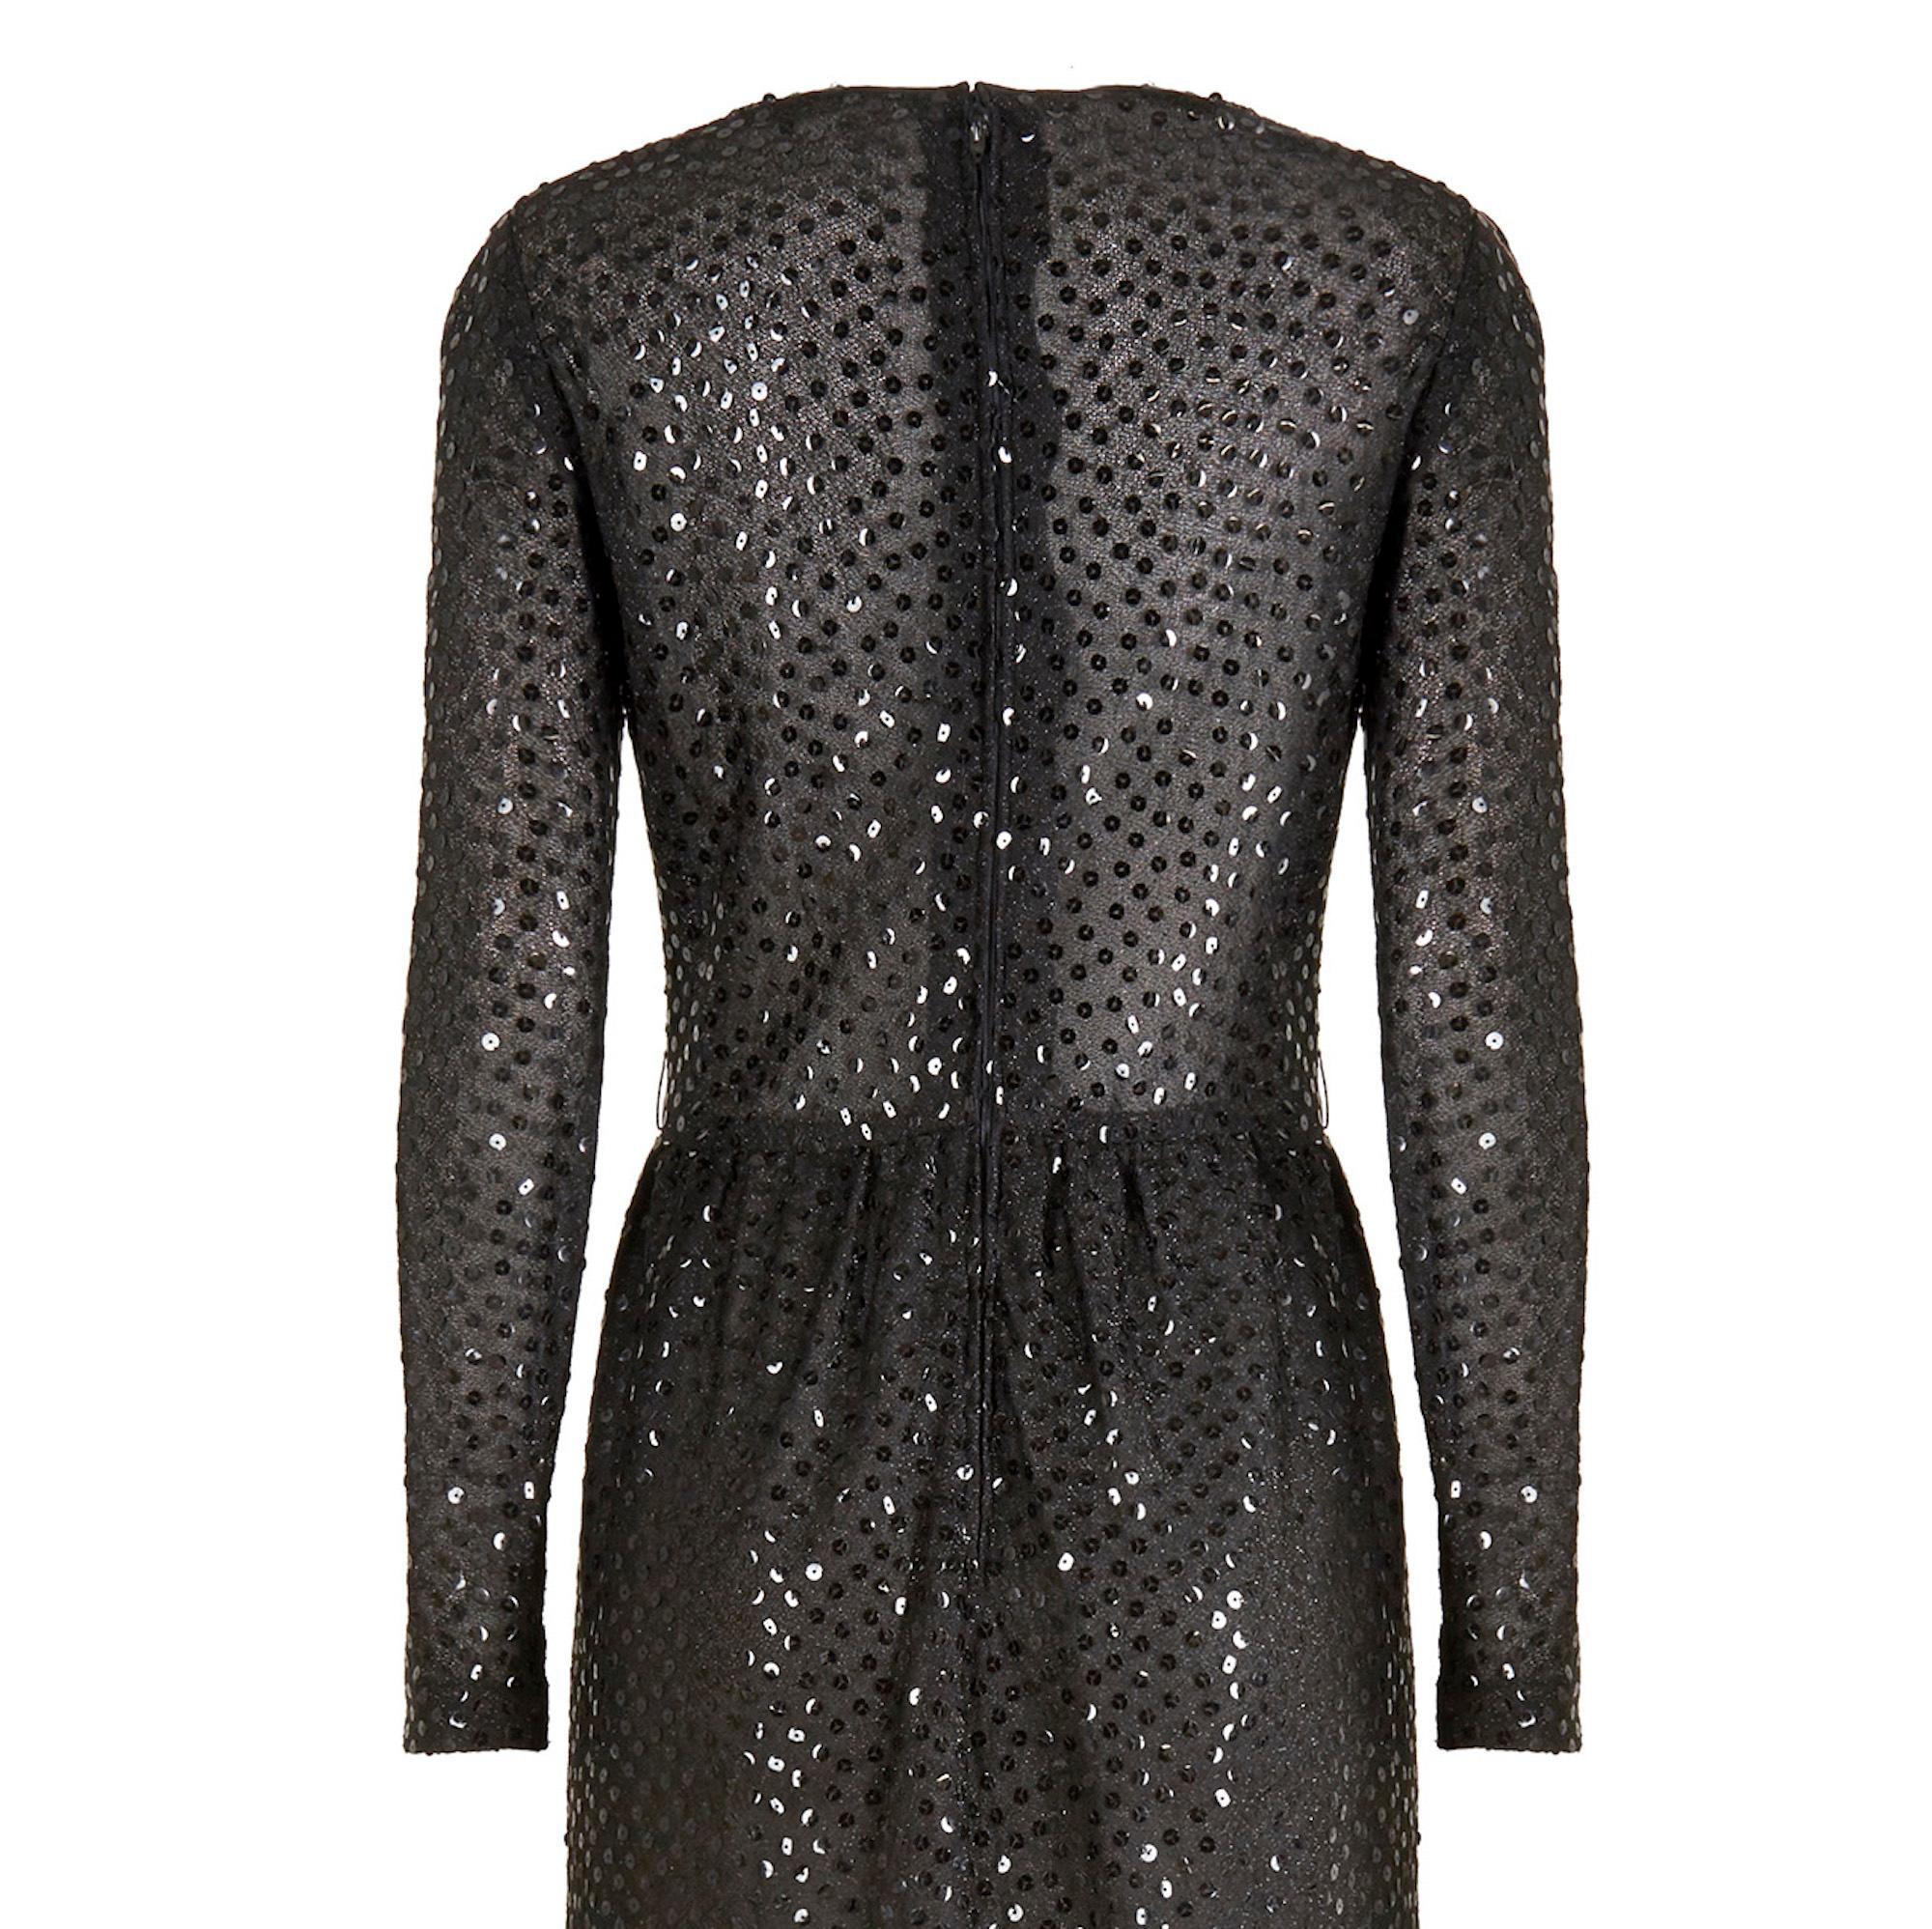 1970s Morty Sussman For Mollie Parnis Black Sequinned Dress For Sale 1